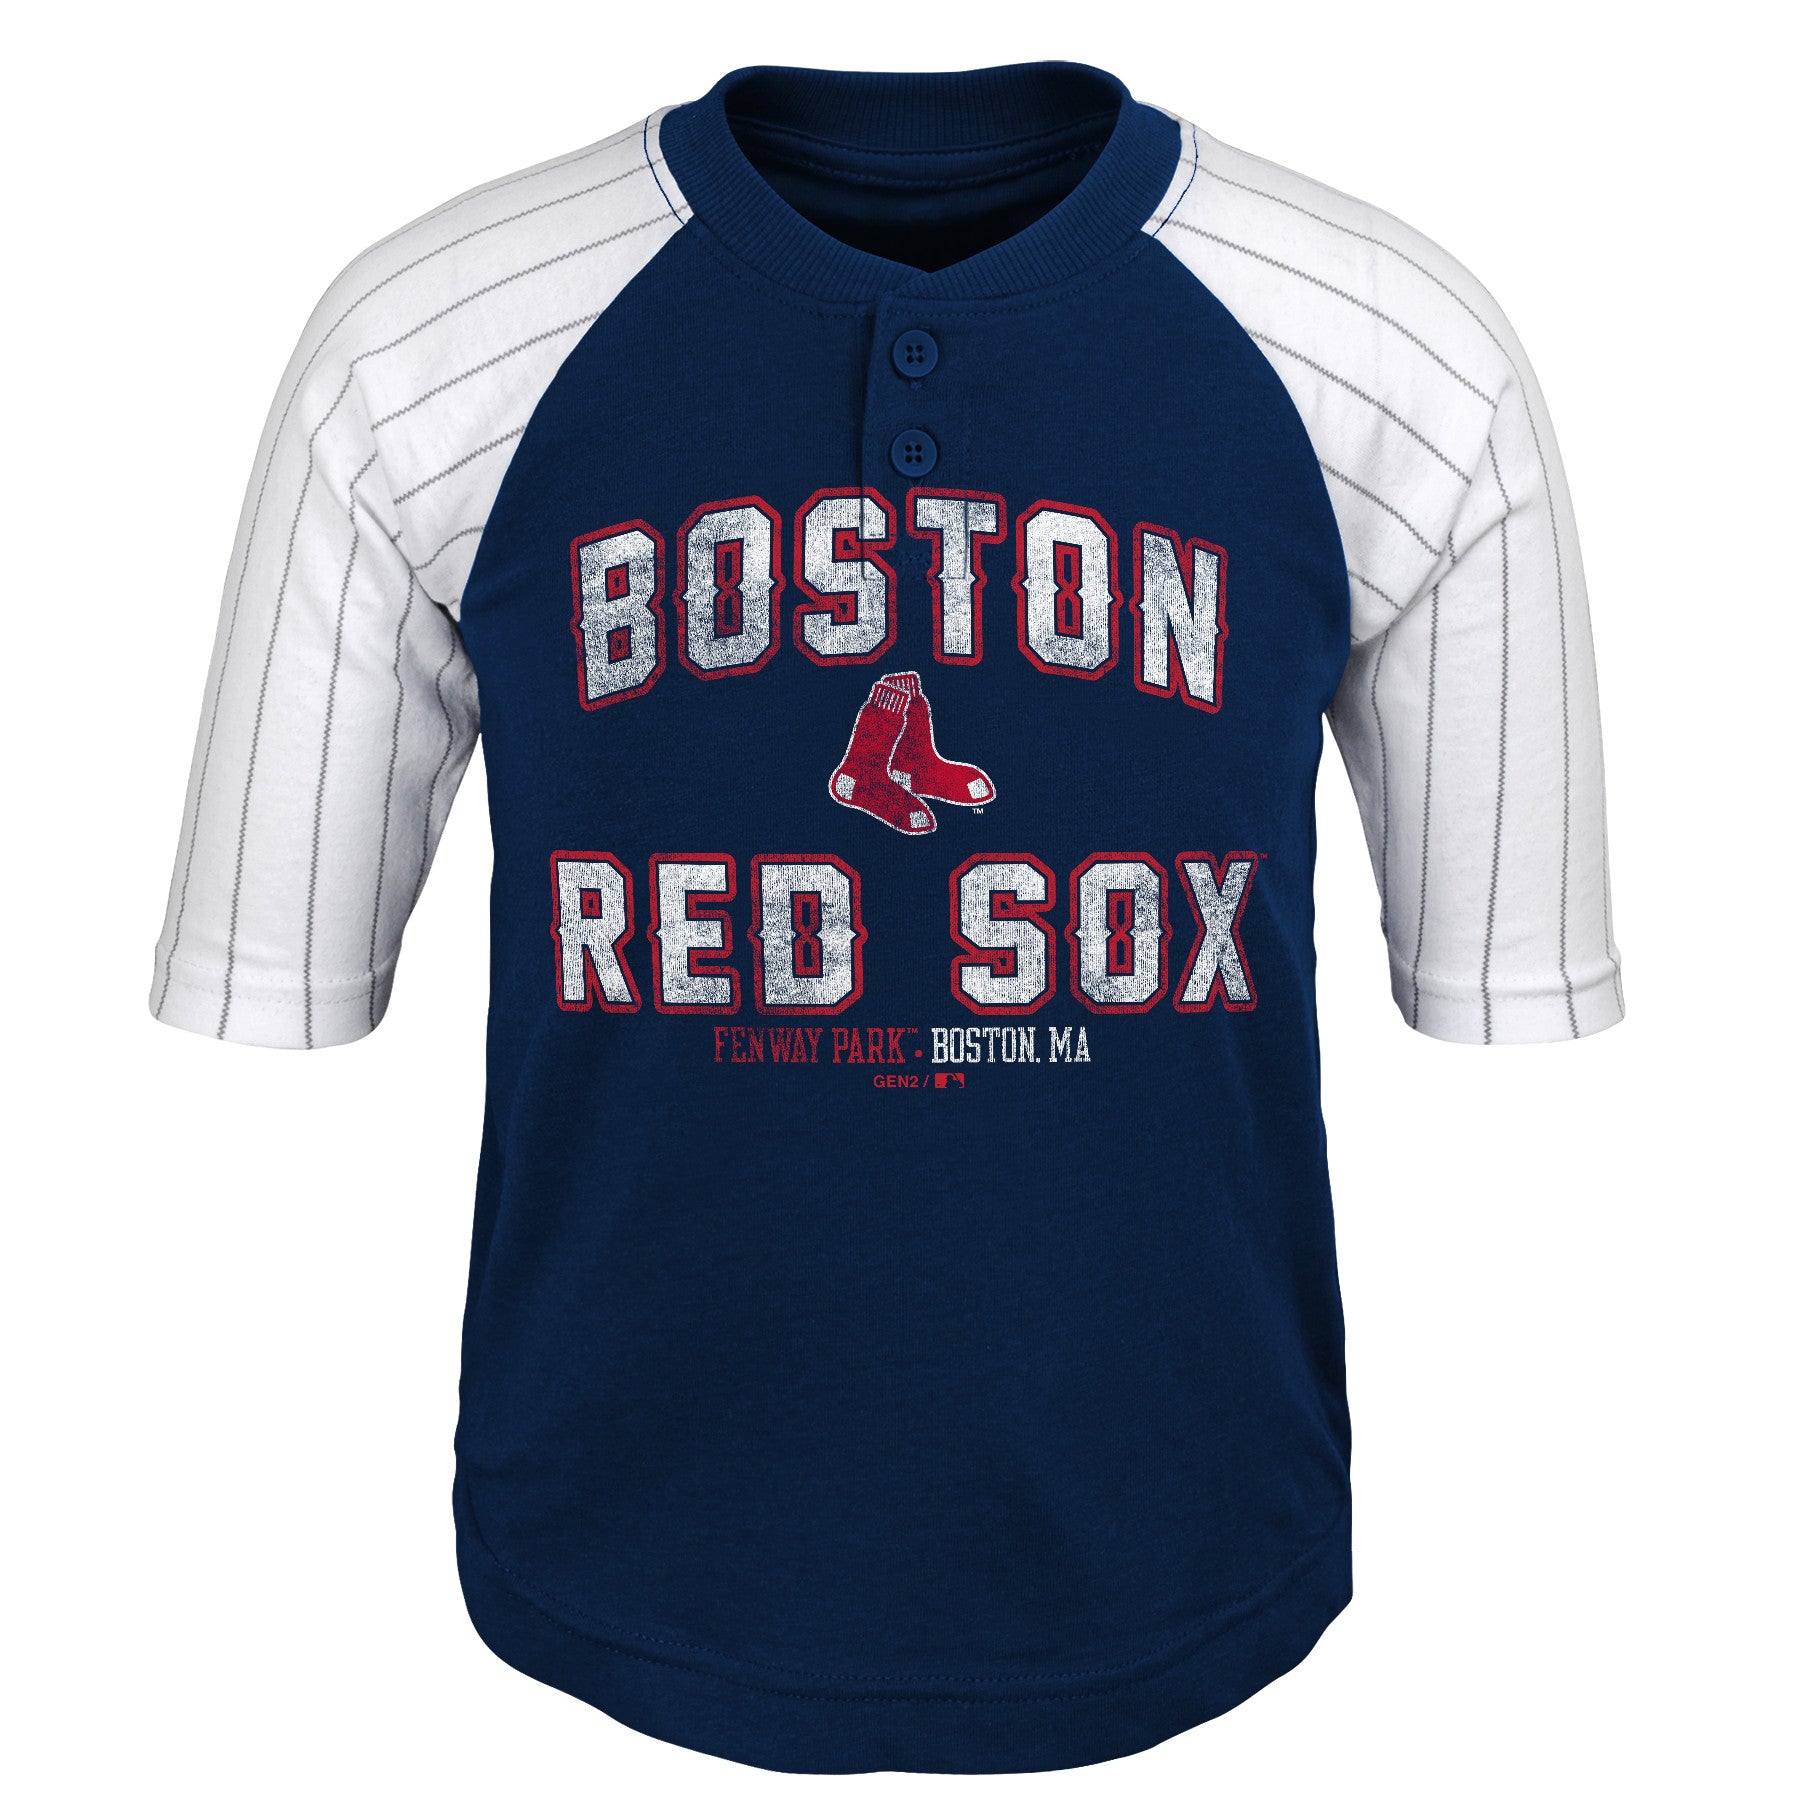 sox baseball shirt